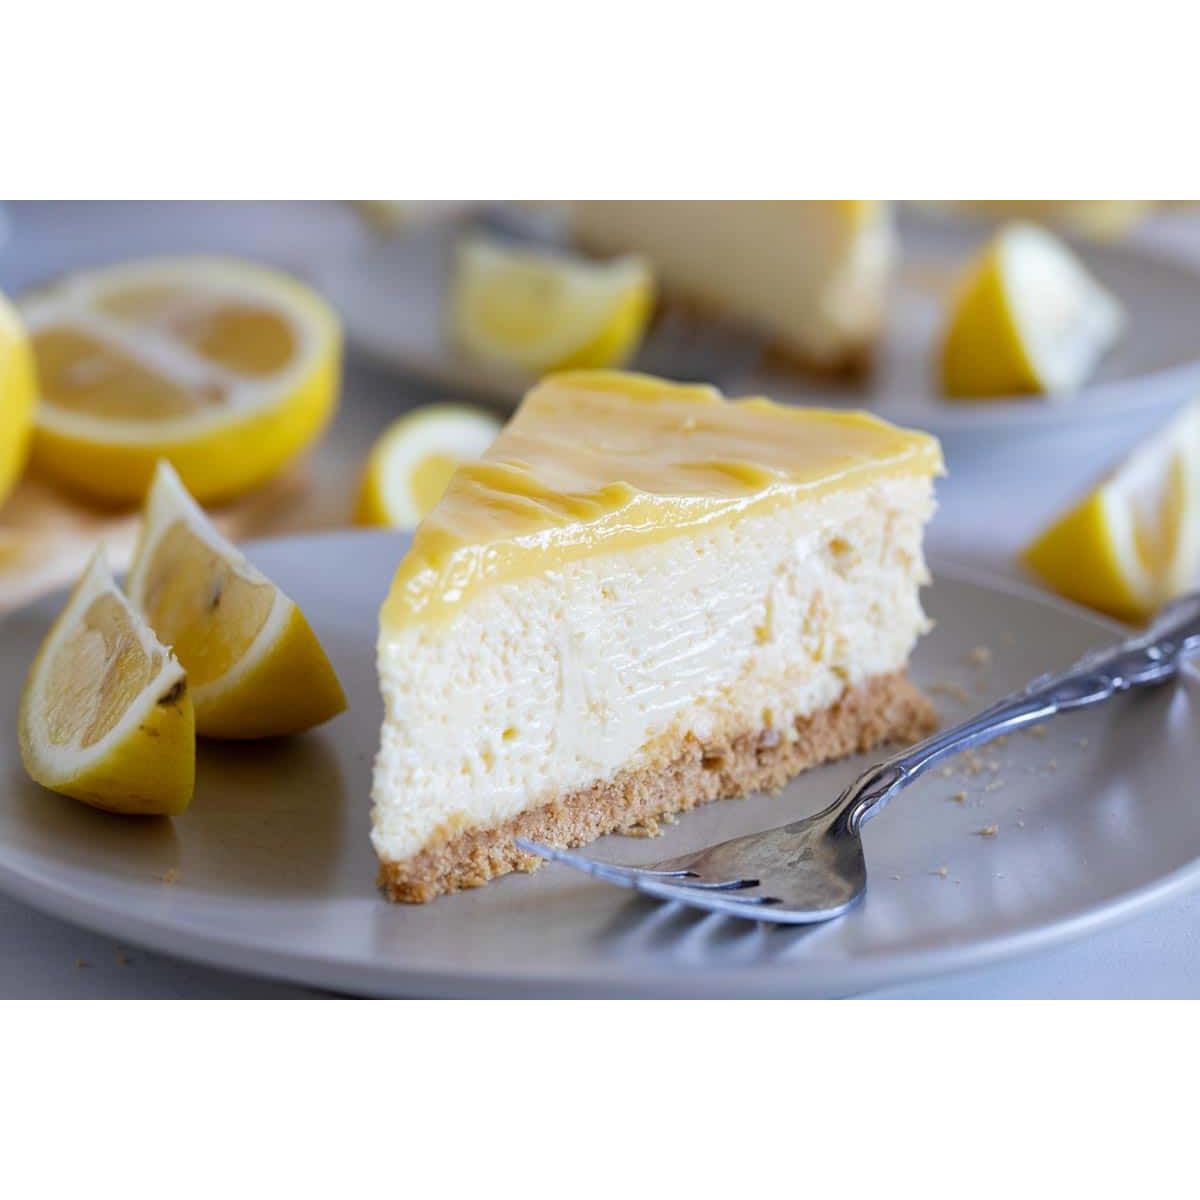 HB Pre Order - Gluten Free Lemon Cheesecake, 9"